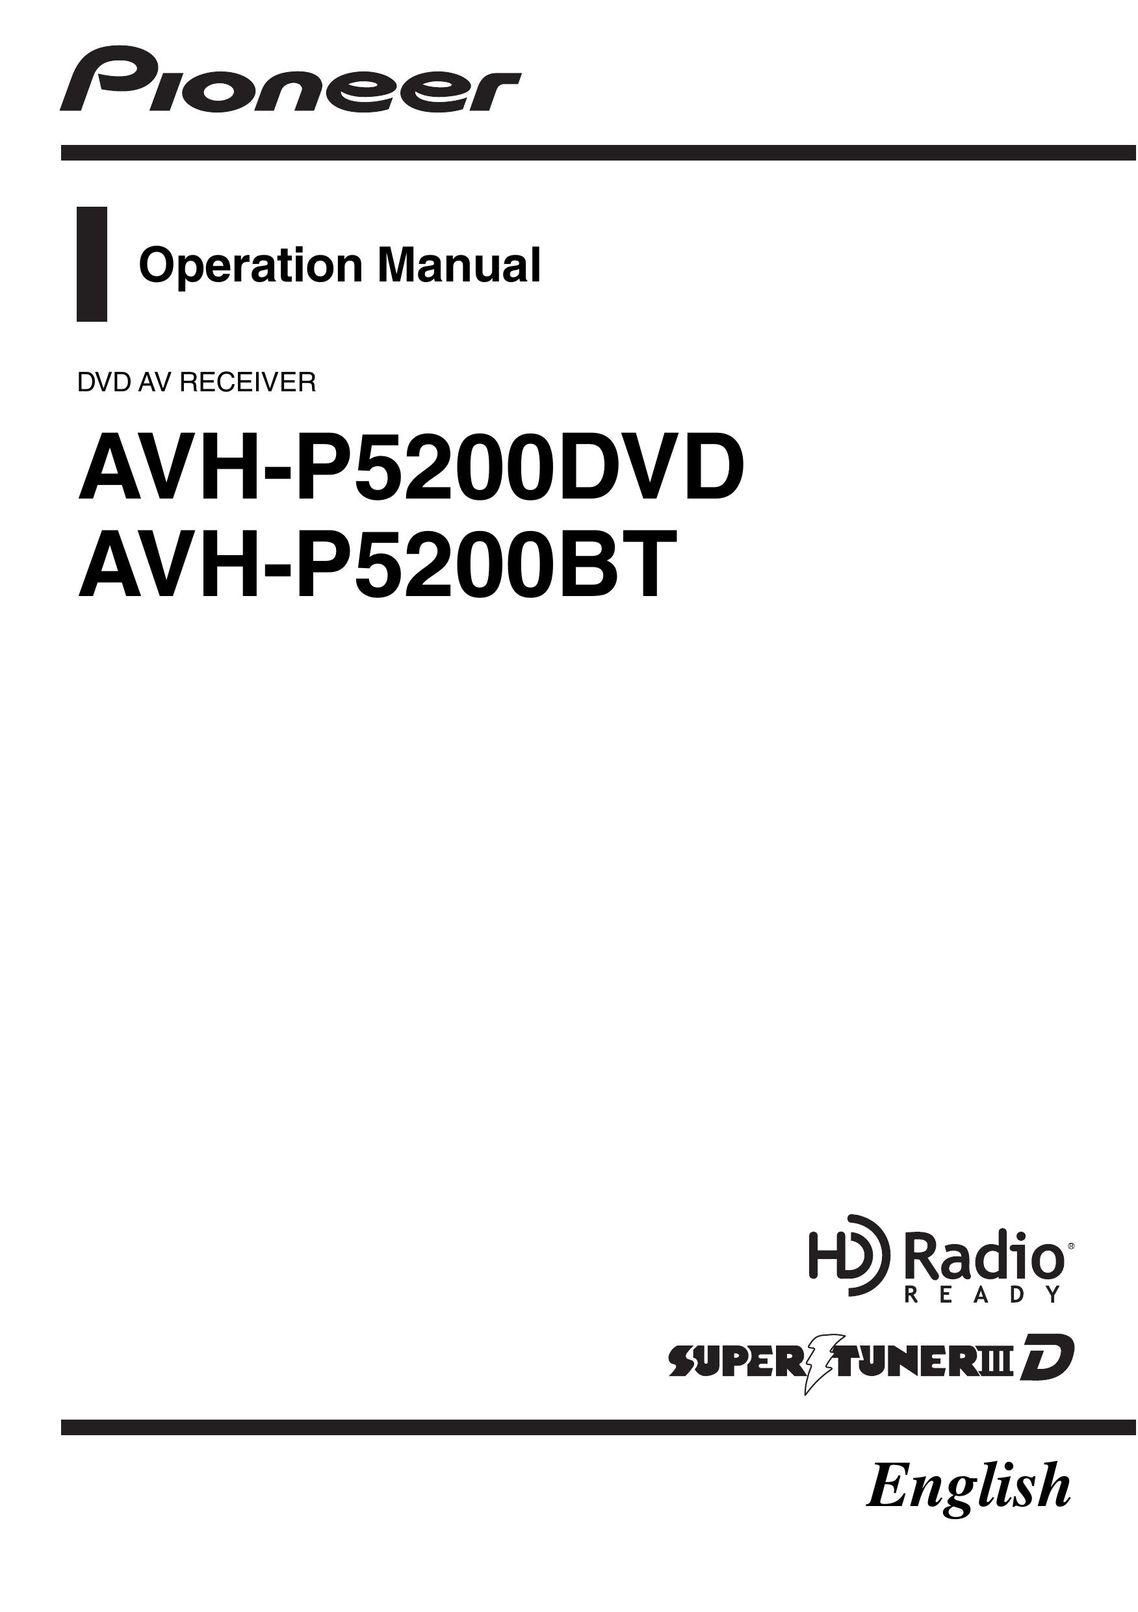 Pioneer AVH-P5200DVD AVH-P5200BT TV Video Accessories User Manual